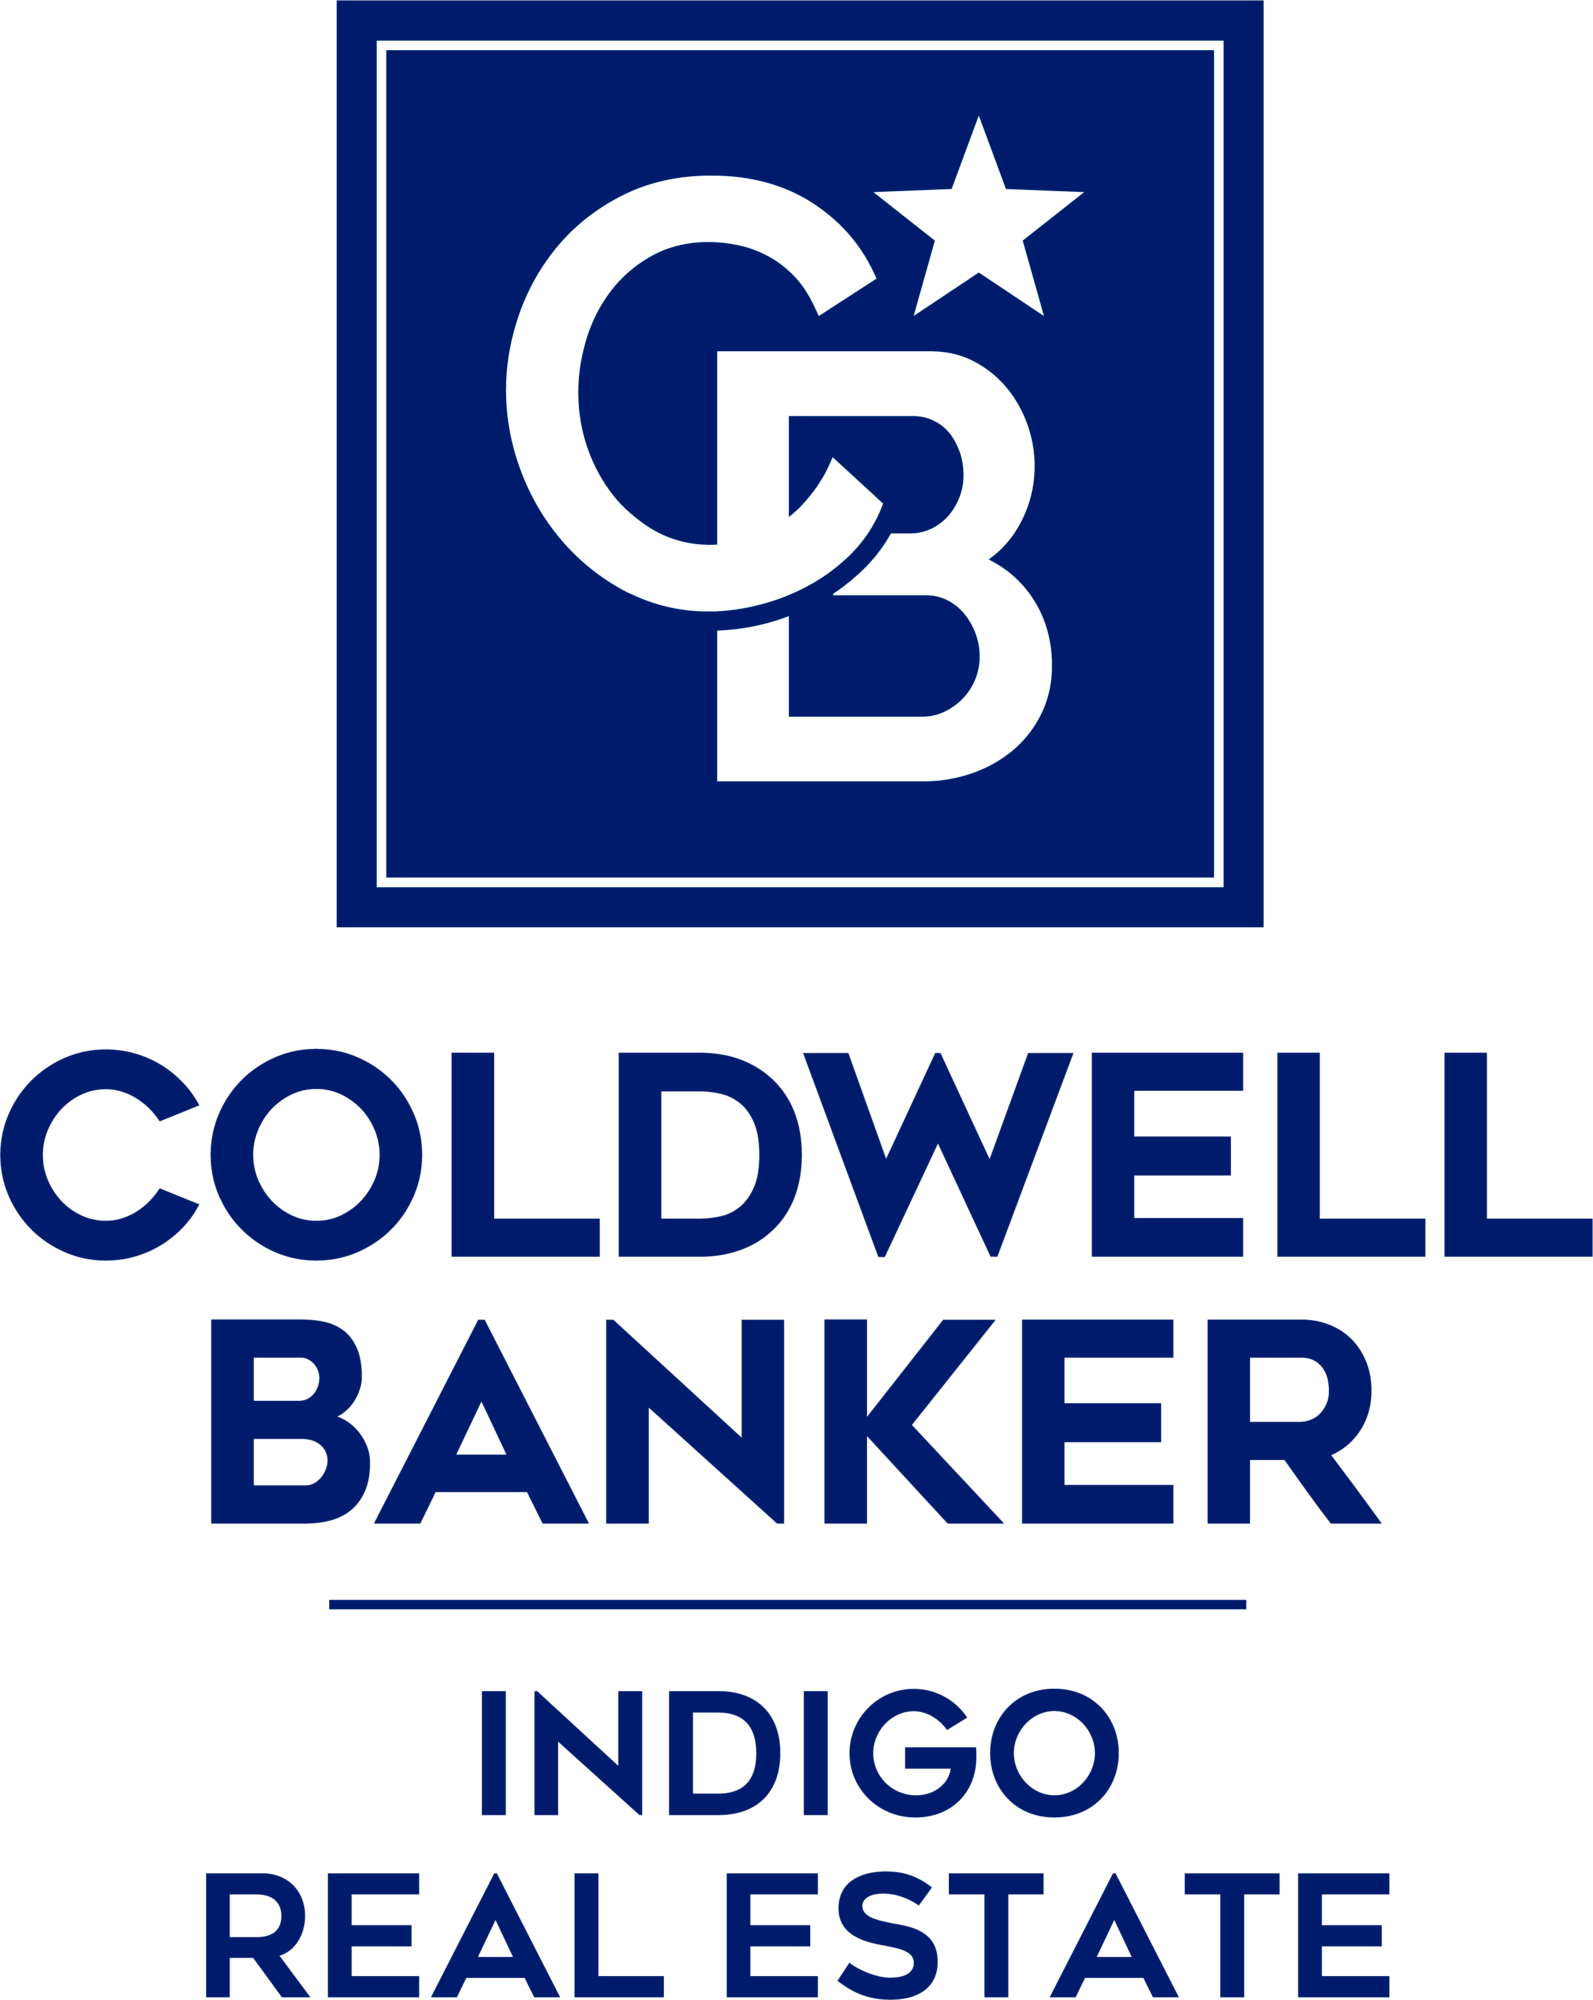 Coldwell Banker Indigo Real Estate